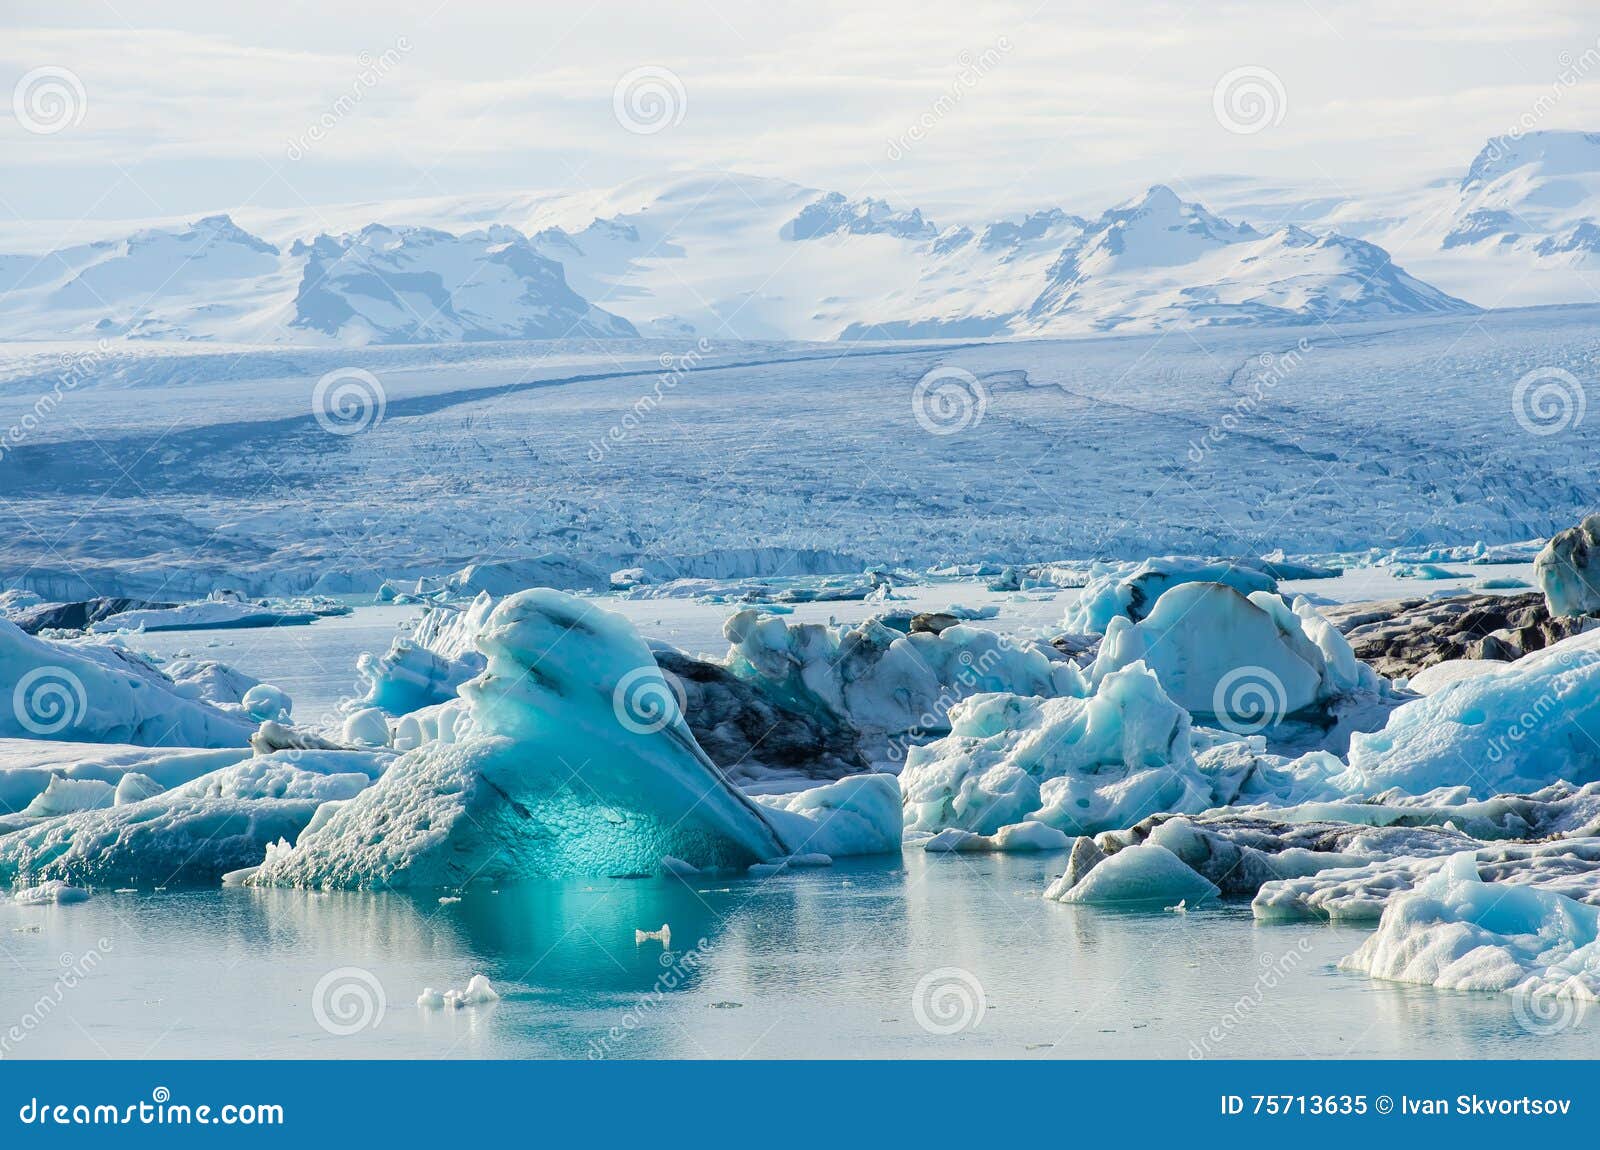 scenic view of icebergs in glacier lagoon, iceland.